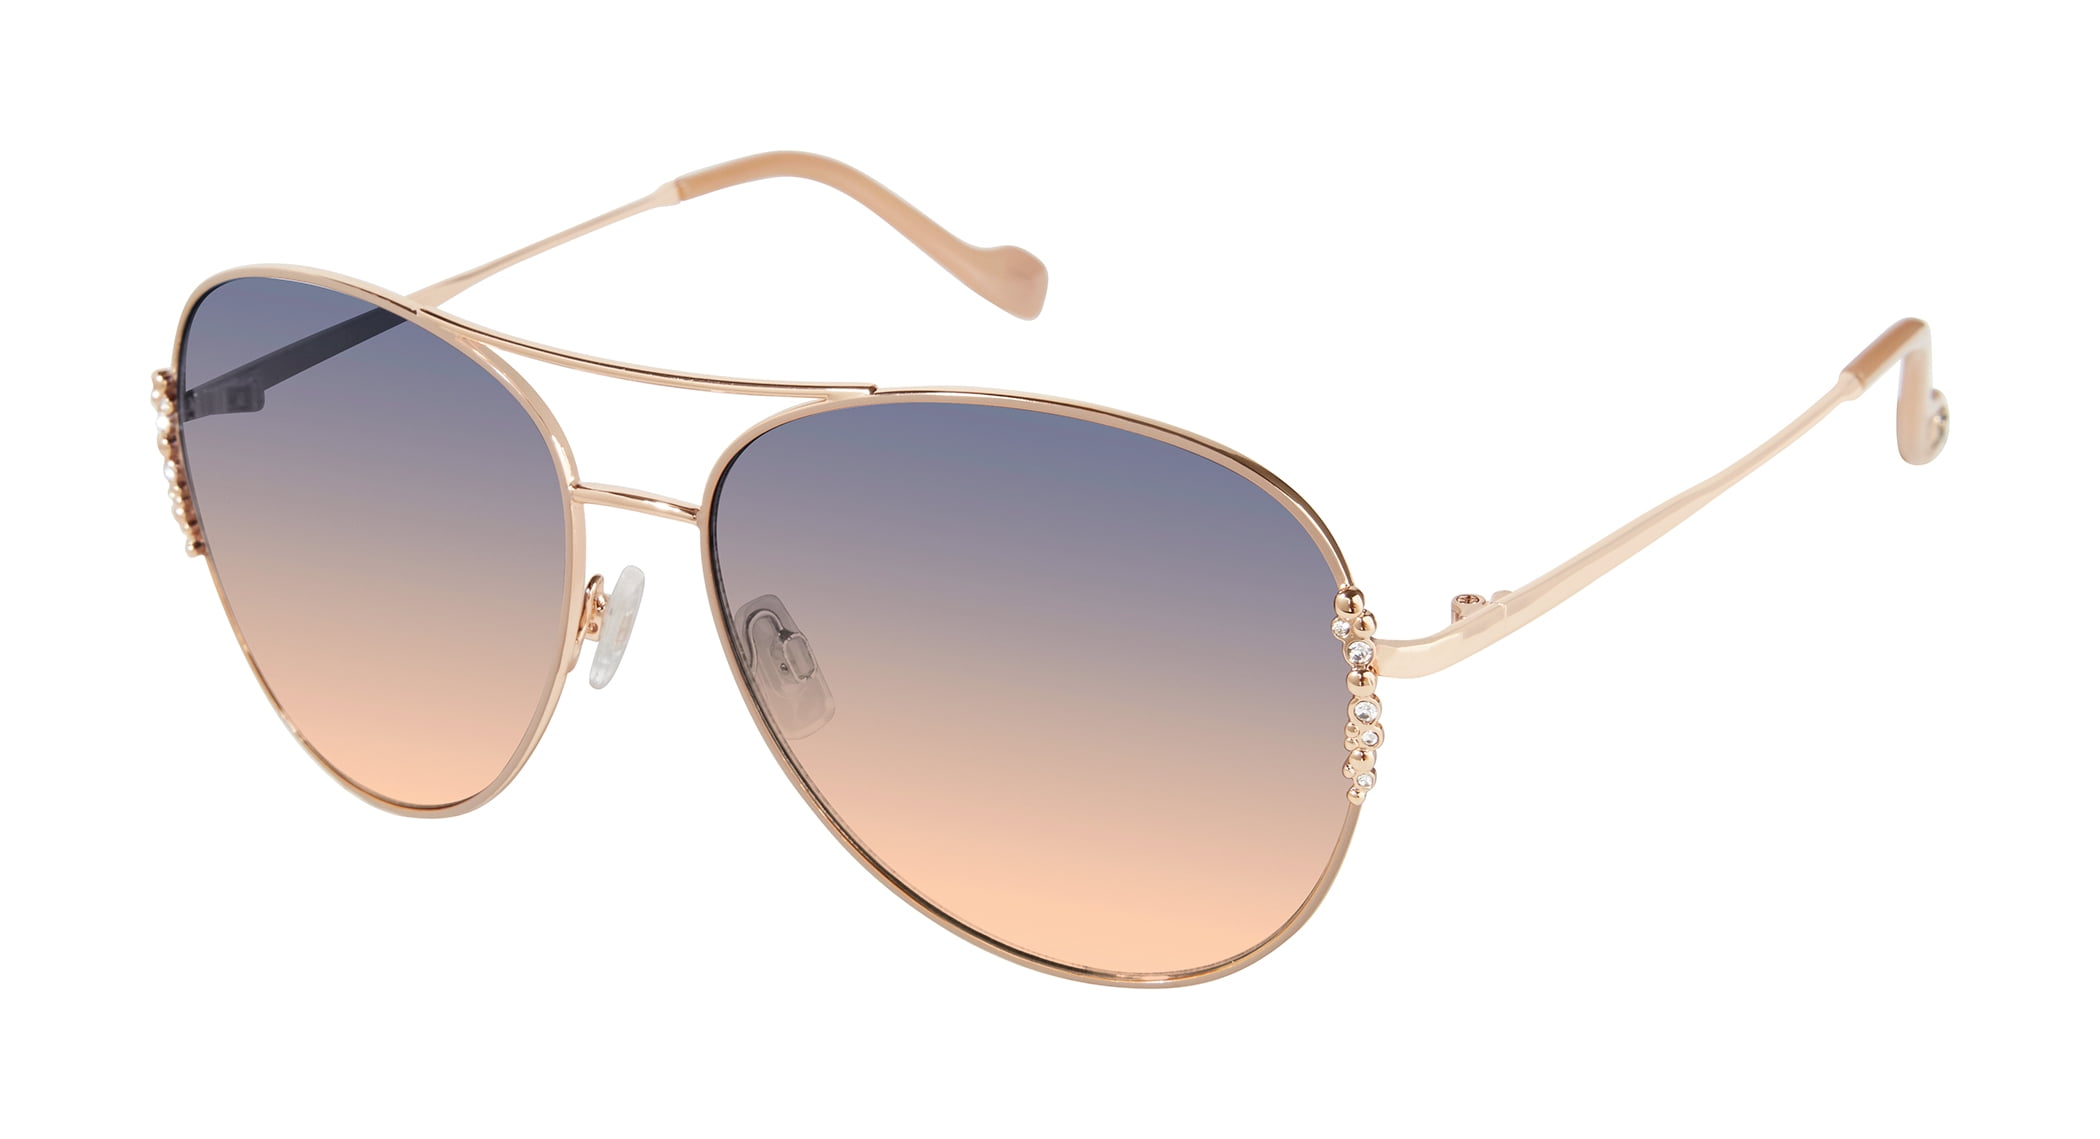 Jessica Simpson J5818 Metal Bedazzled Adult Aviator Sunglasses for ...